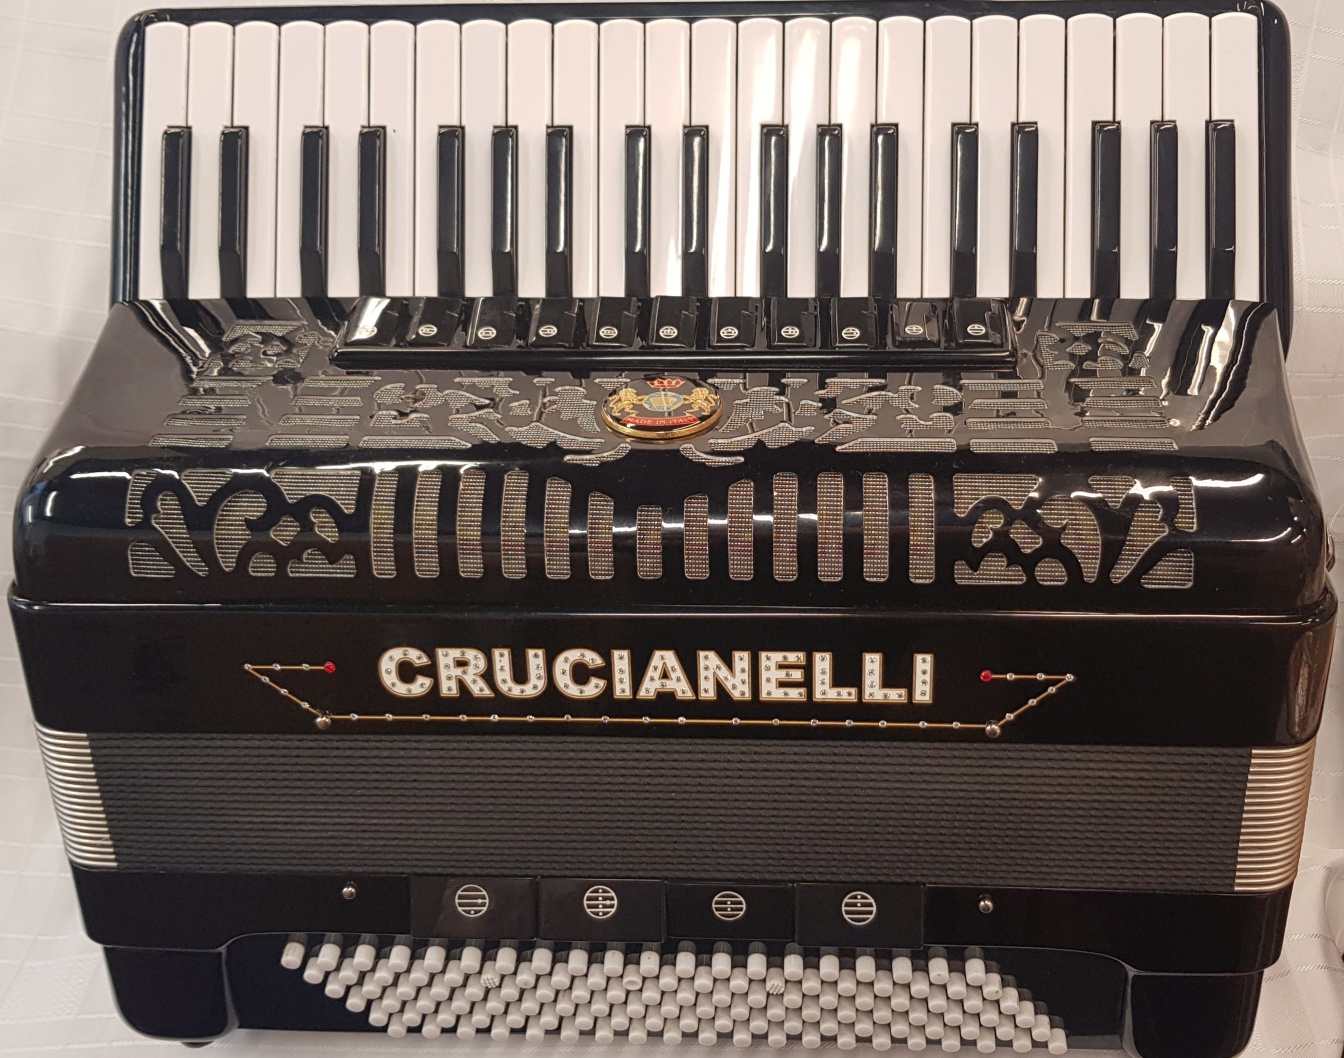 Crucianelli 120 bass accordion - The Accordion Shop